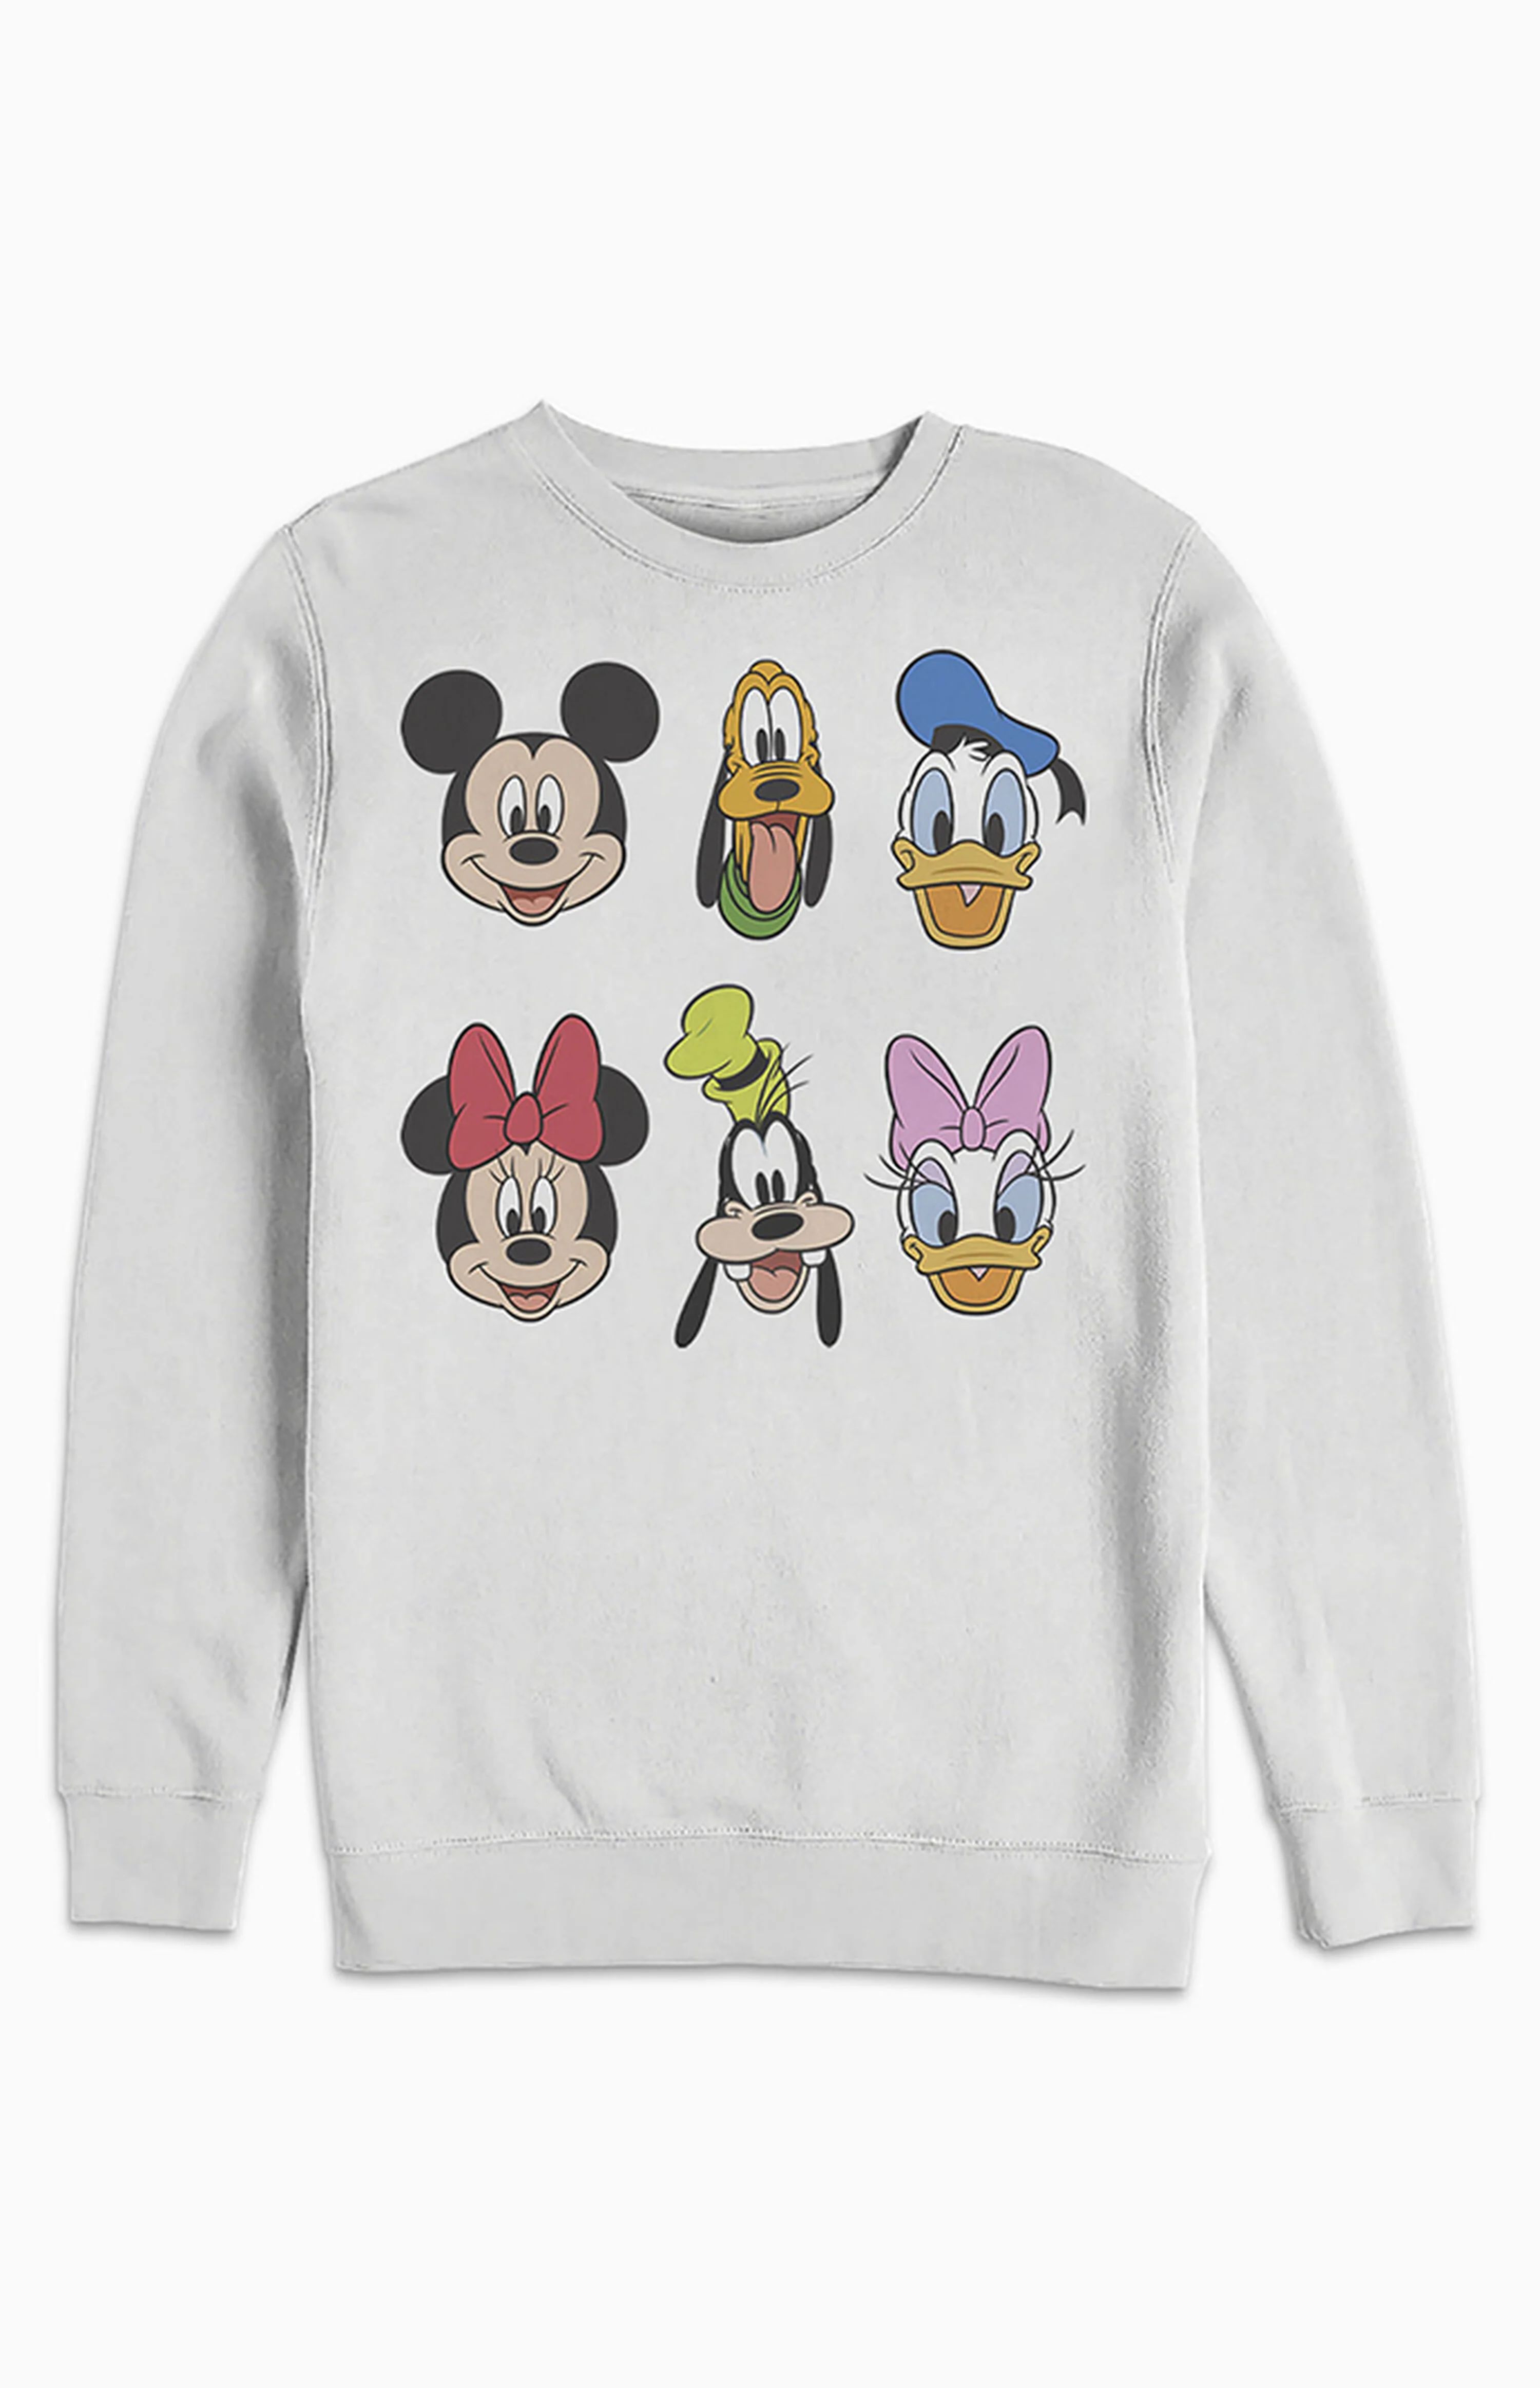 Disney Mickey And Company Crew Neck Sweatshirt | PacSun